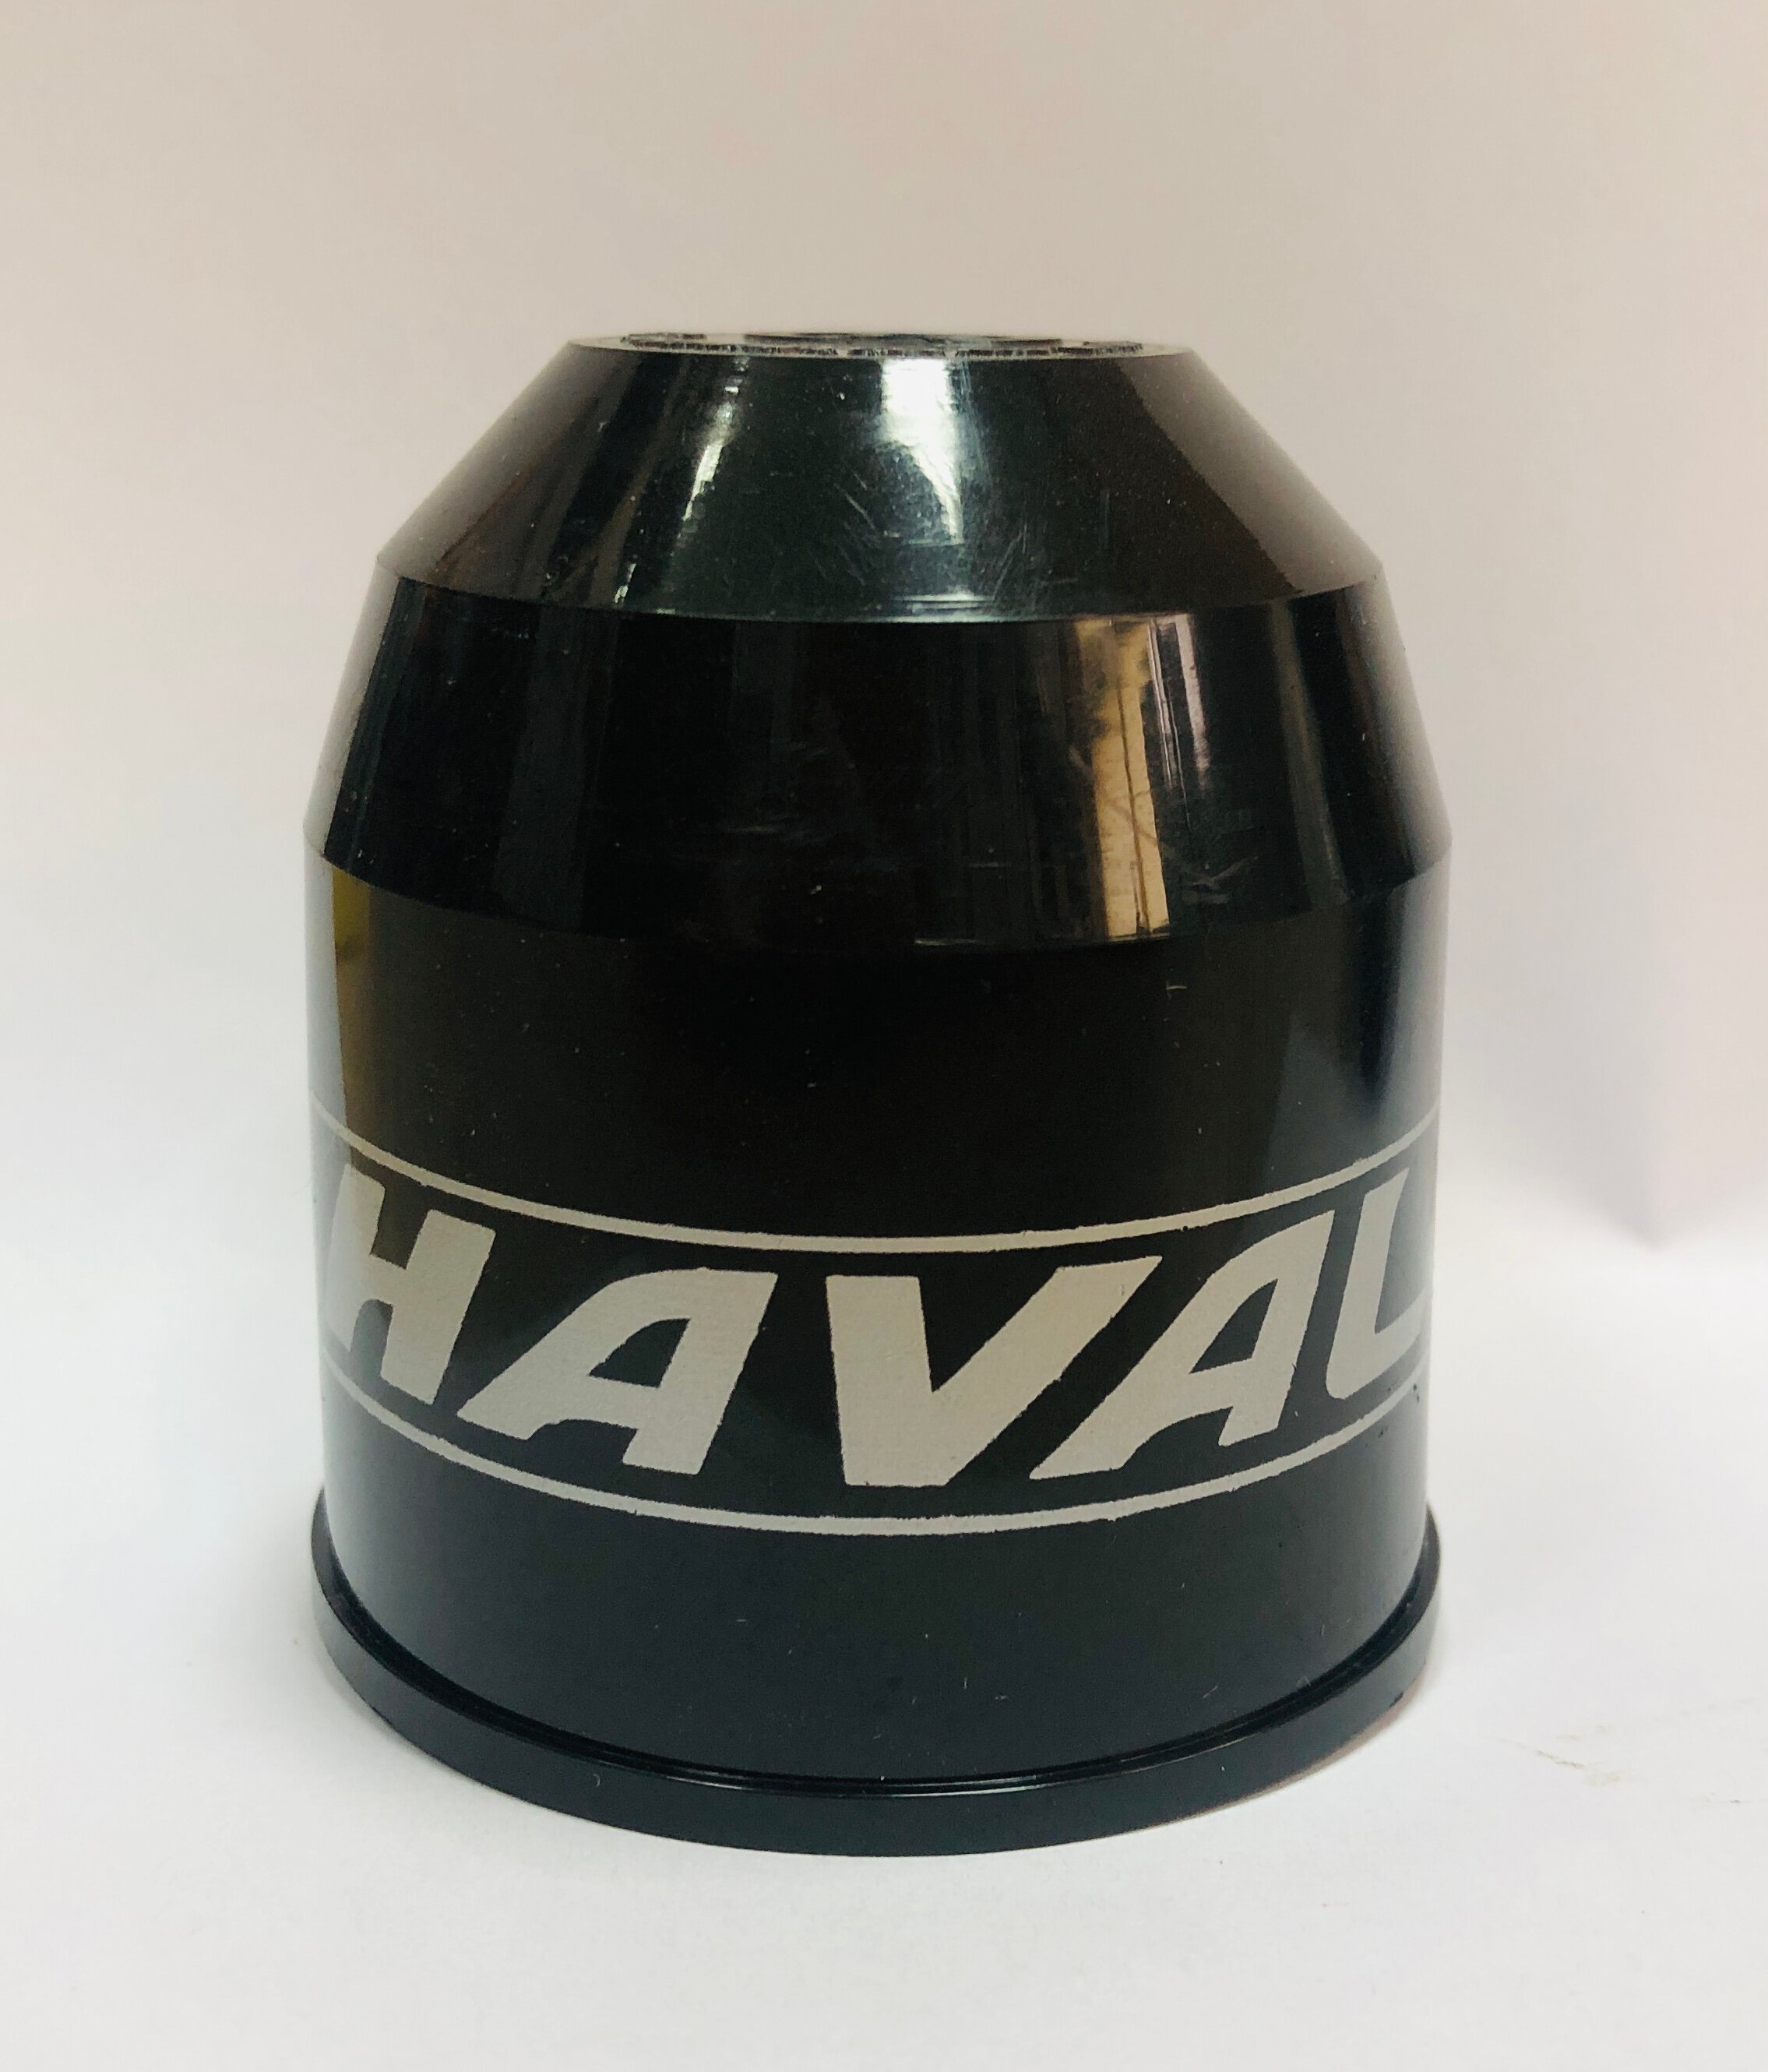 Колпачок на шар фаркопа для Haval, пластик, черный